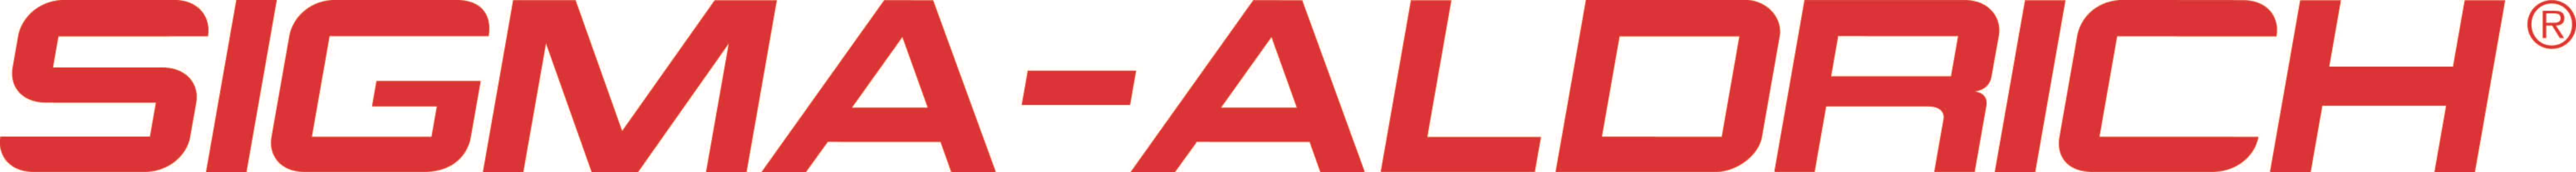 Sigma Aldrich. Sigma Aldrich лого. Этикетка Sigma Aldrich. "Sigma-Aldrich", США. Сигма сборник